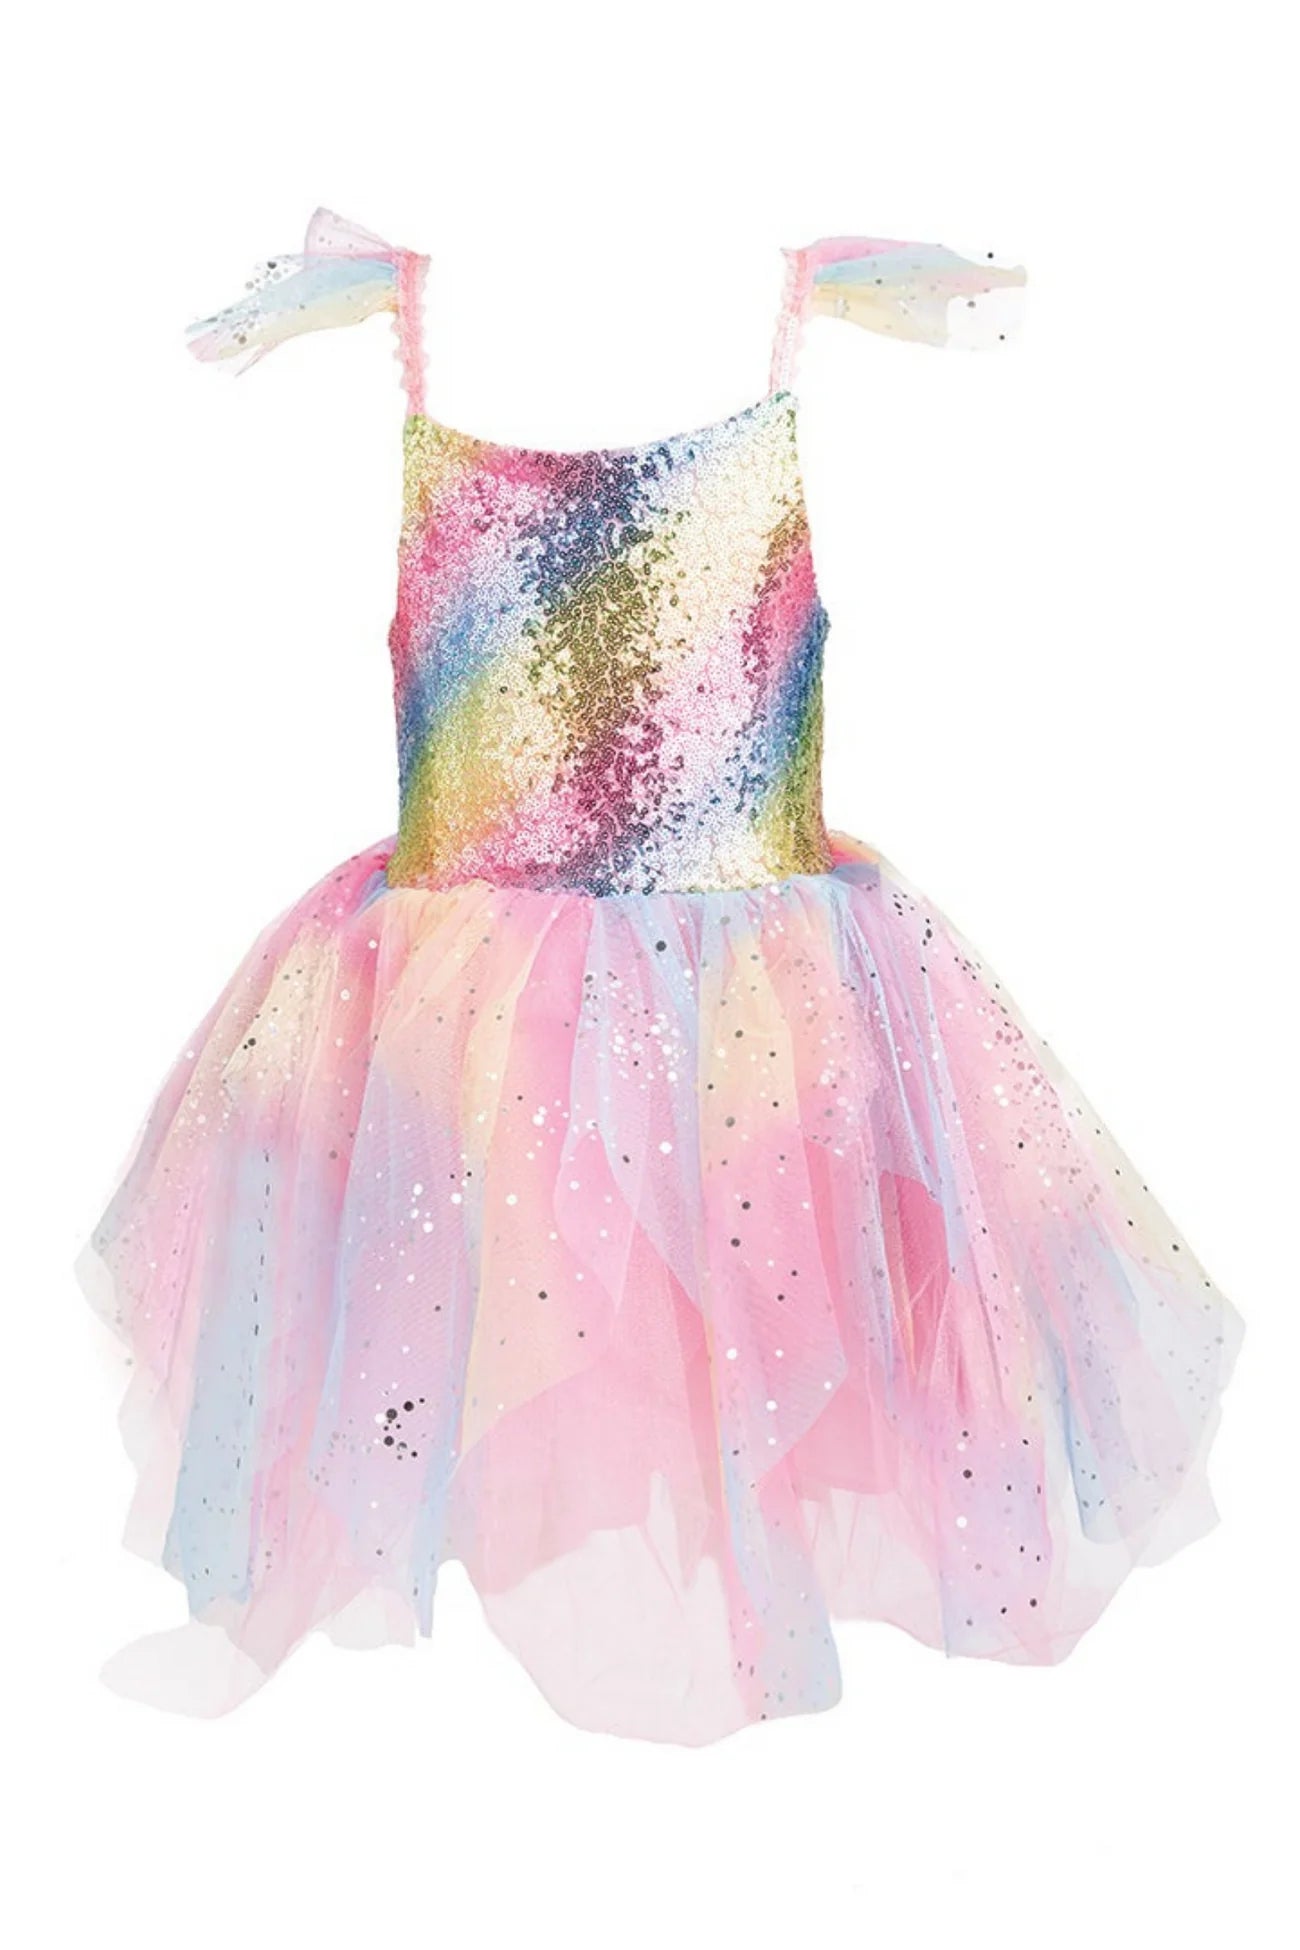 Great Pretenders: Rainbow Fairy Dress & Wings